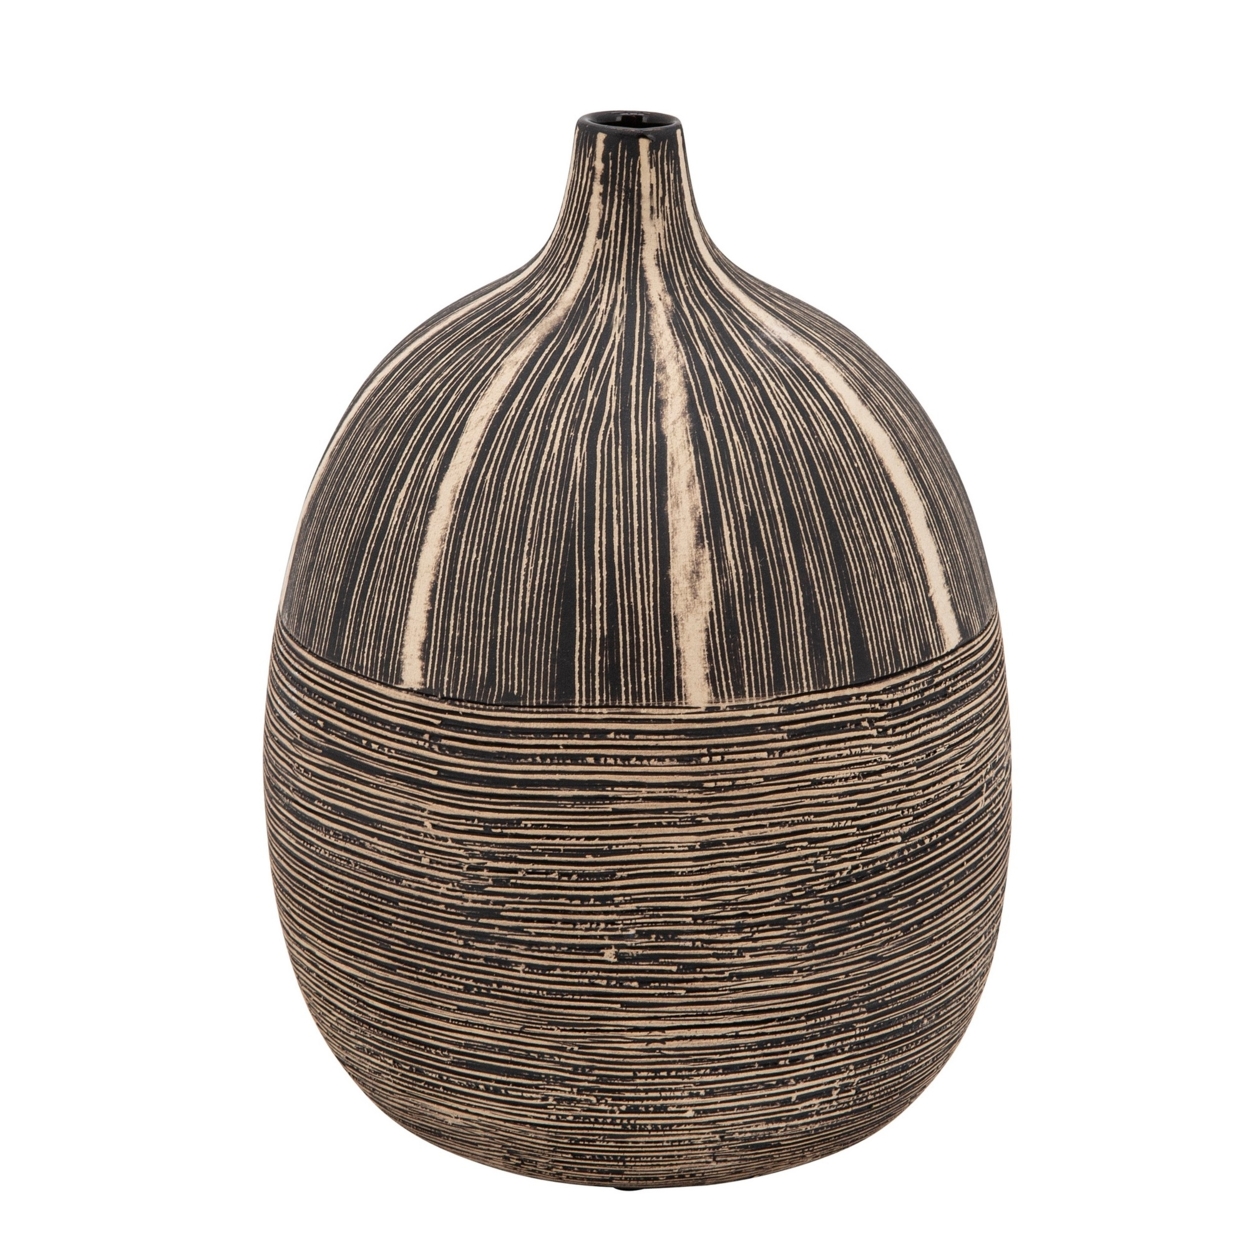 Bellied Shape Ceramic Vase With Textured Lines, Brown- Saltoro Sherpi